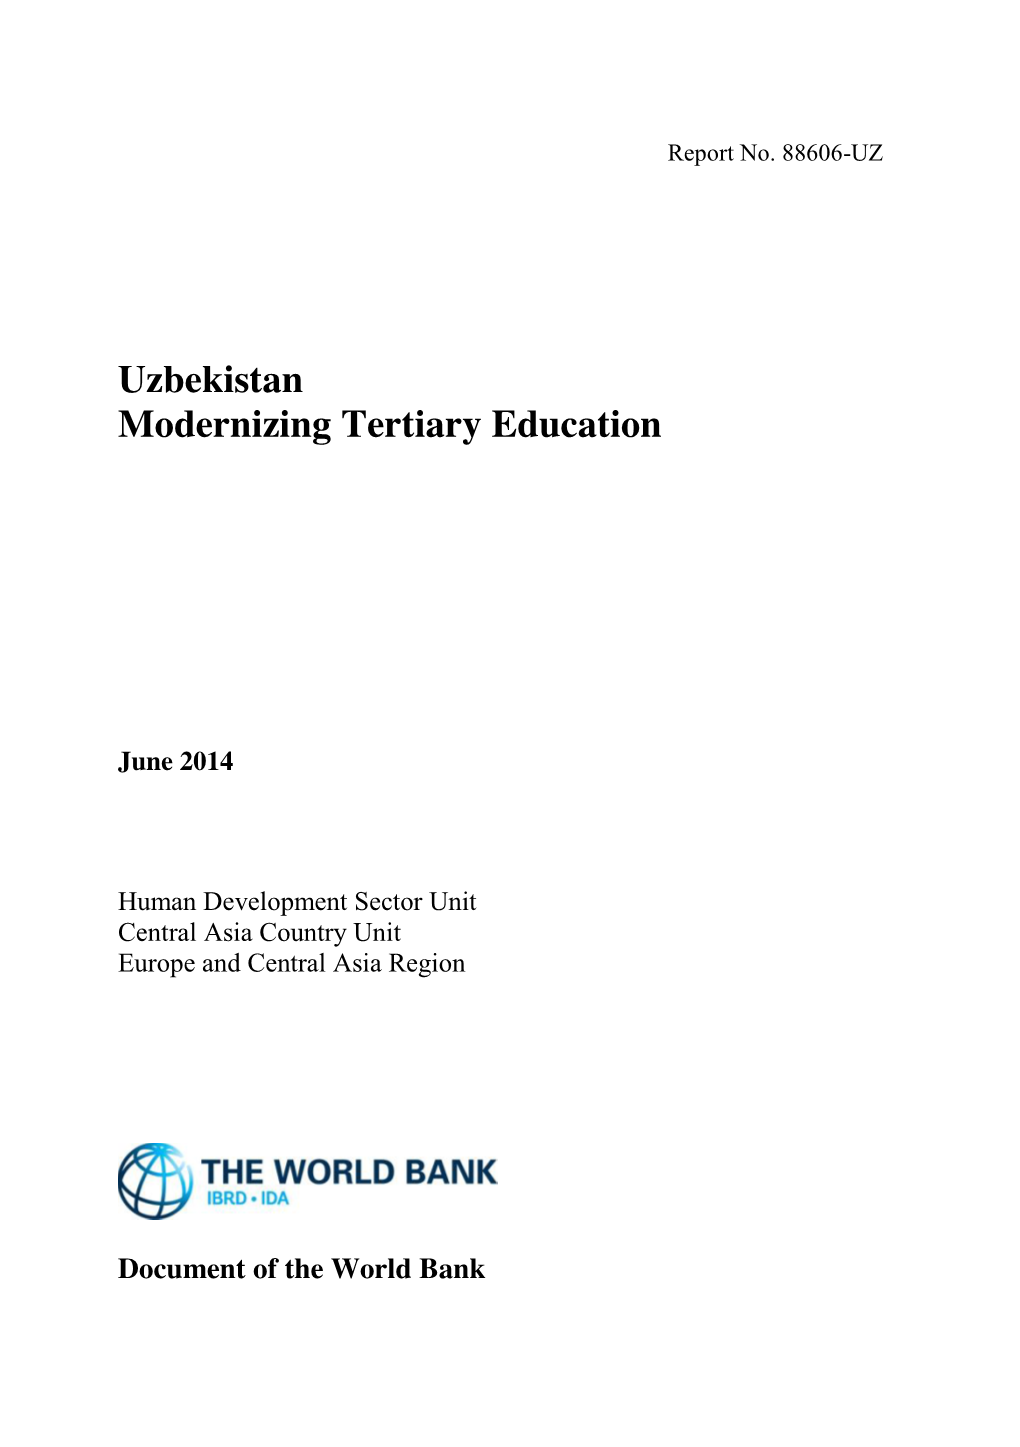 Uzbekistan Modernizing Tertiary Education